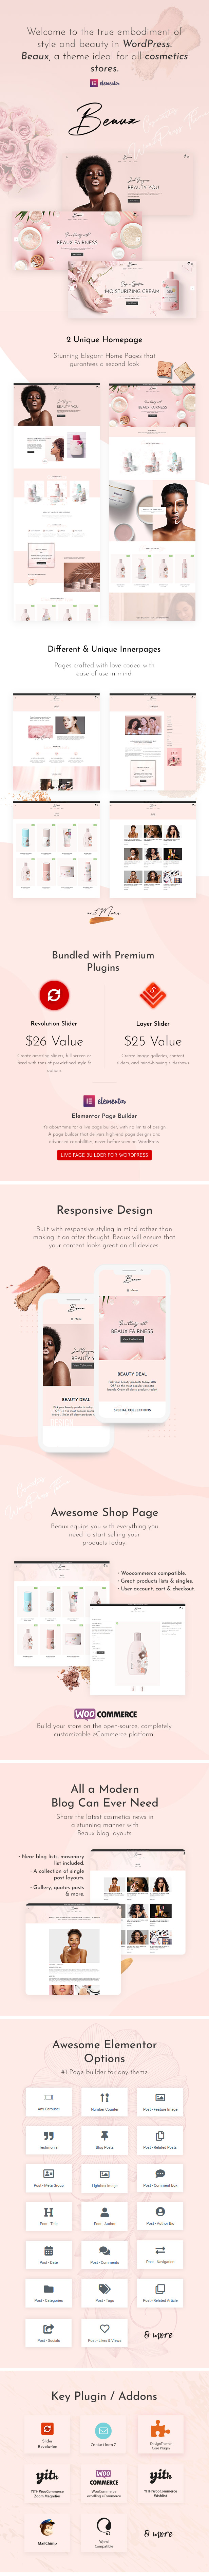 Beaux - Beauty Cosmetics Shop WordPress Theme - 1